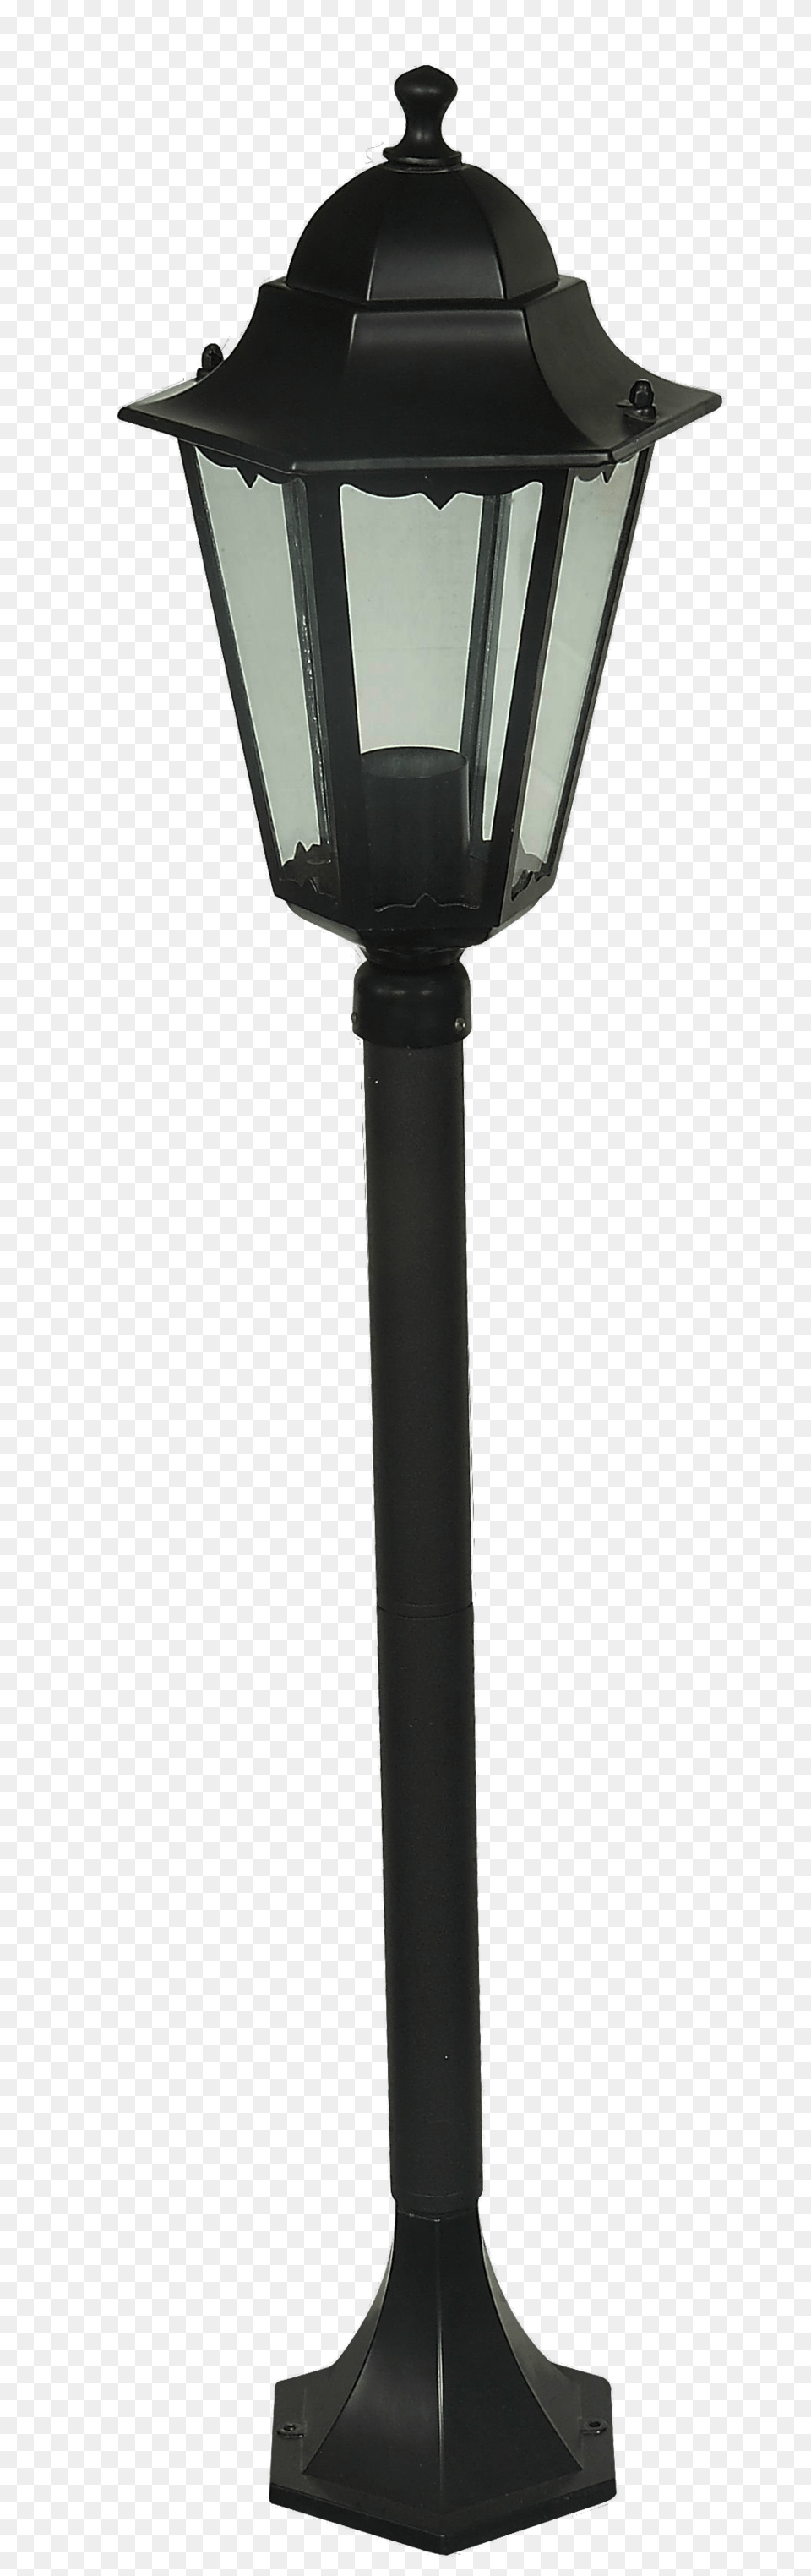 Lantern Pole, Lamp, Lampshade, Lamp Post Png